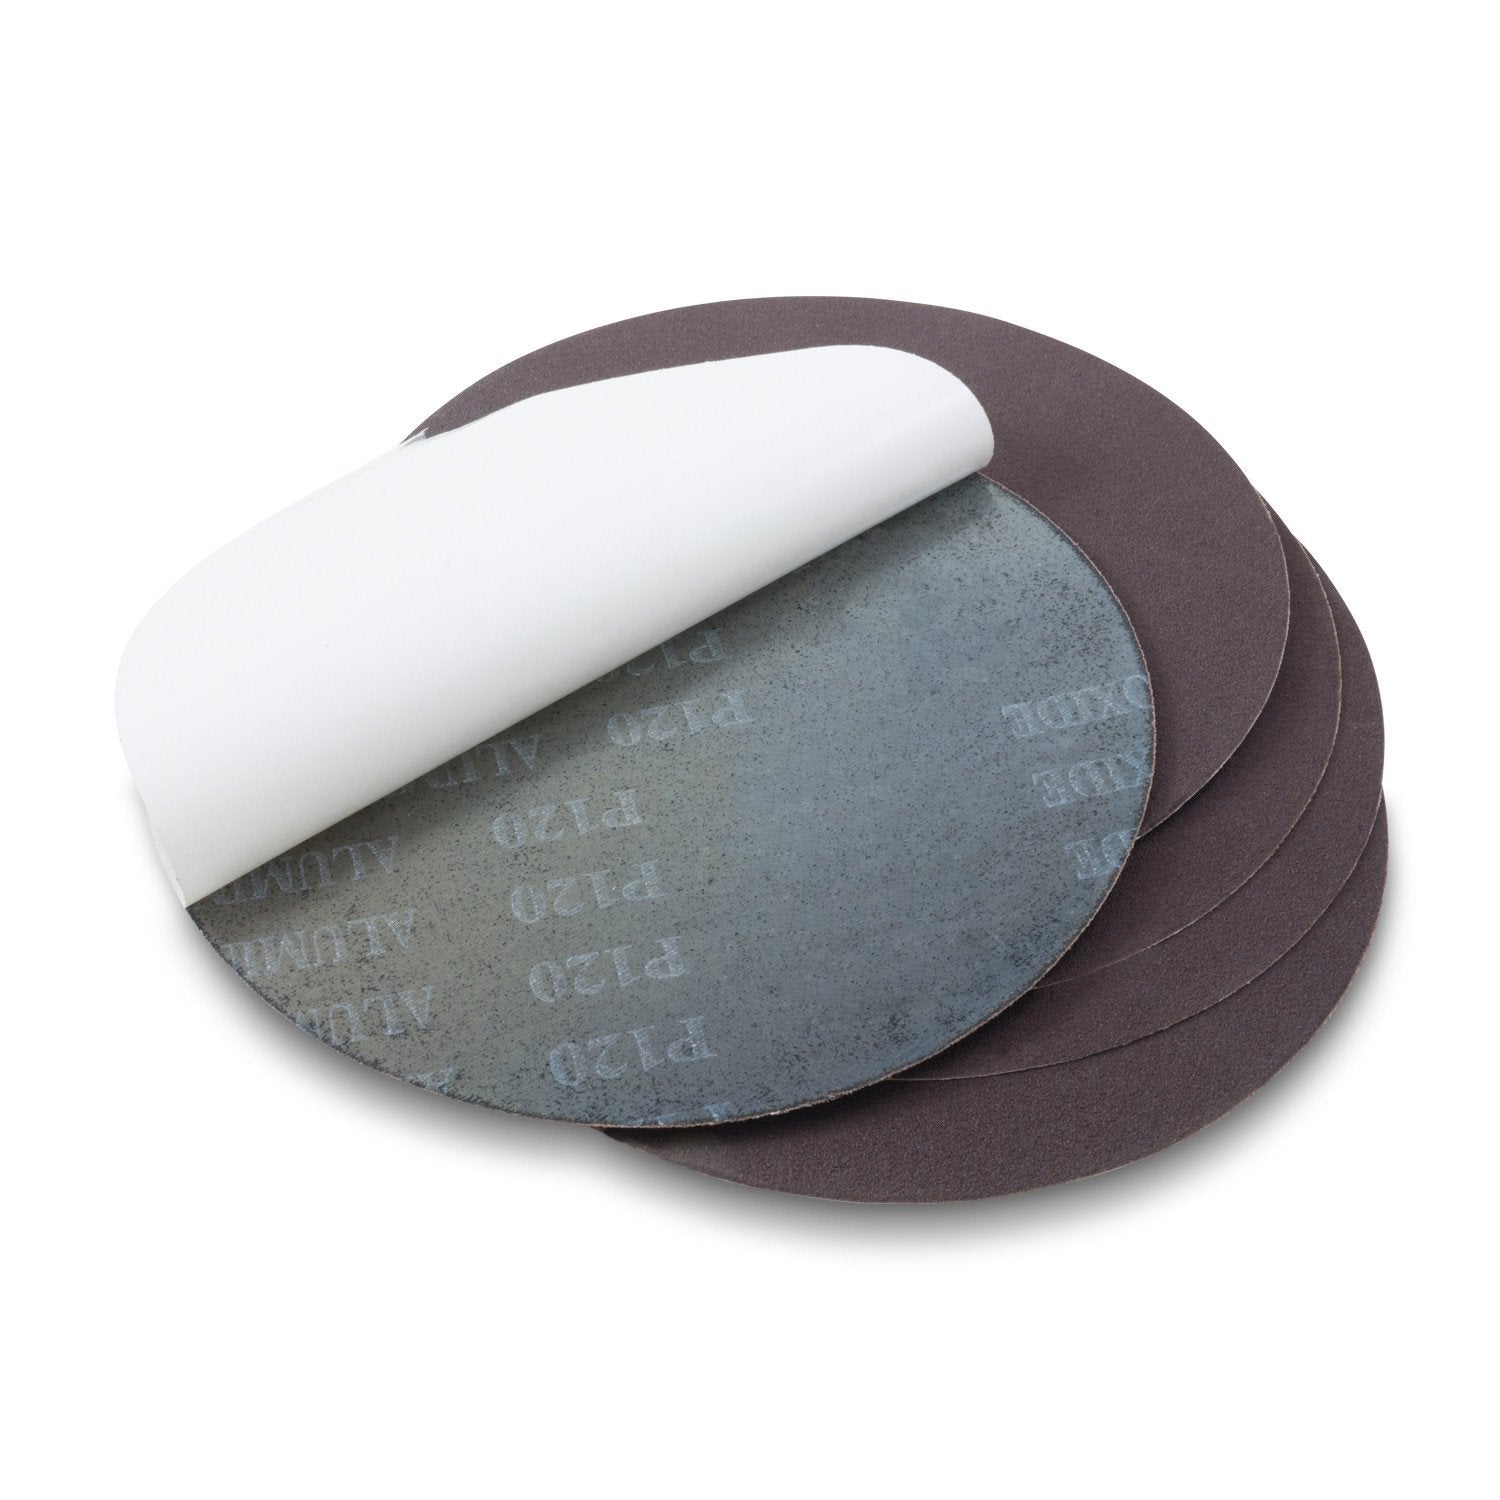 12 Inch Adhesive Back Aluminum Oxide Metal Sanding Discs, 5 Pack - Red Label Abrasives